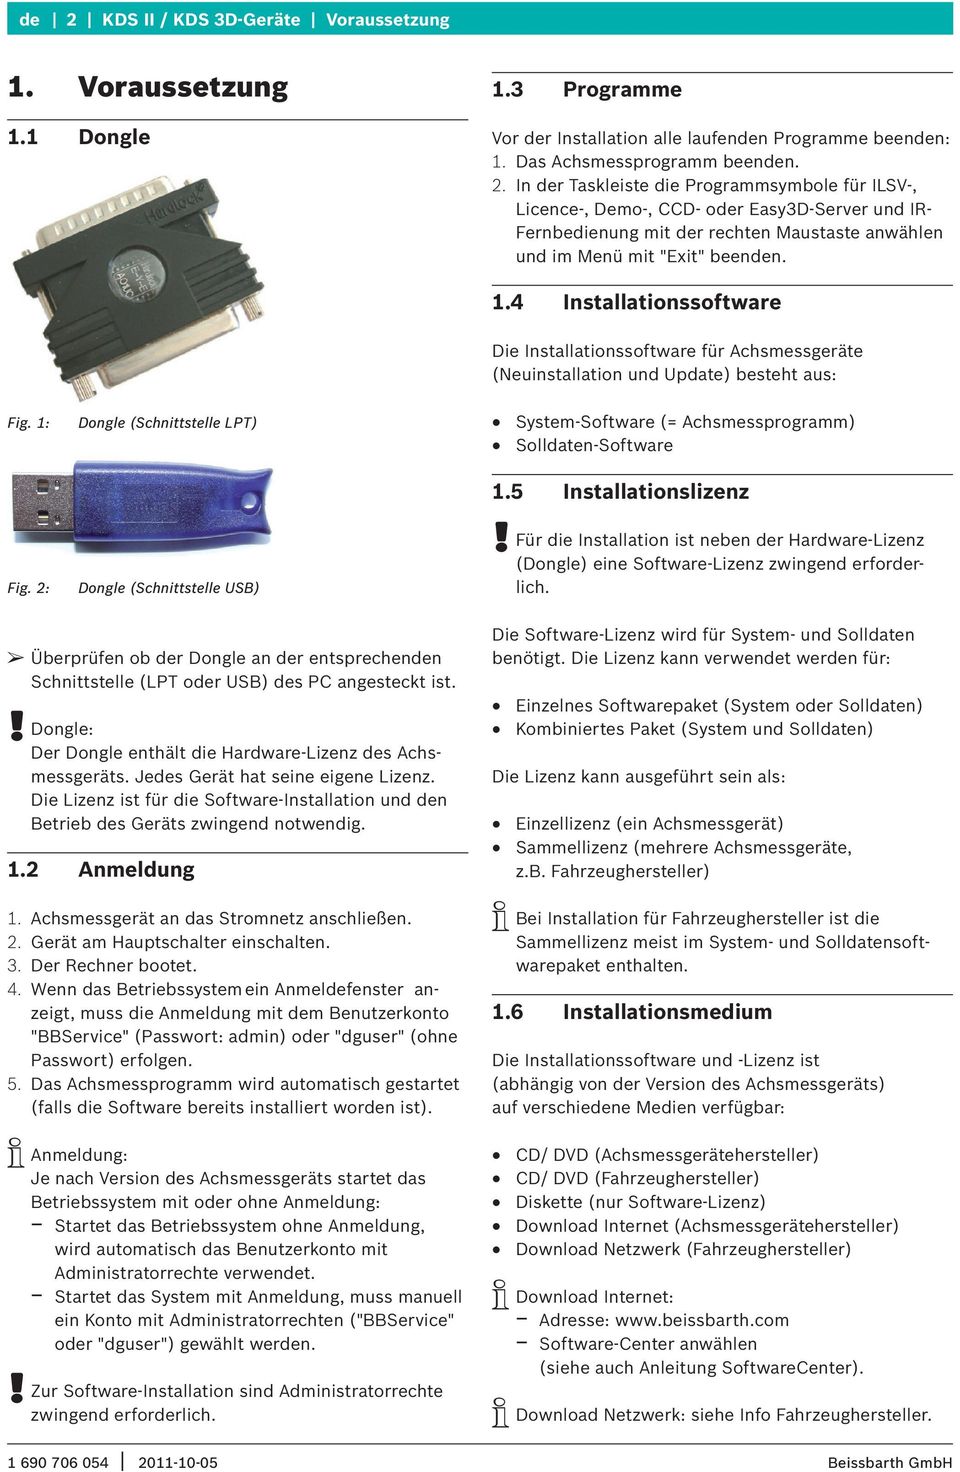 1: Dongle (Schnittstelle LPT) System-Software (= Achsmessprogramm) Solldaten-Software Fig. 2: Dongle (Schnittstelle USB) 1.